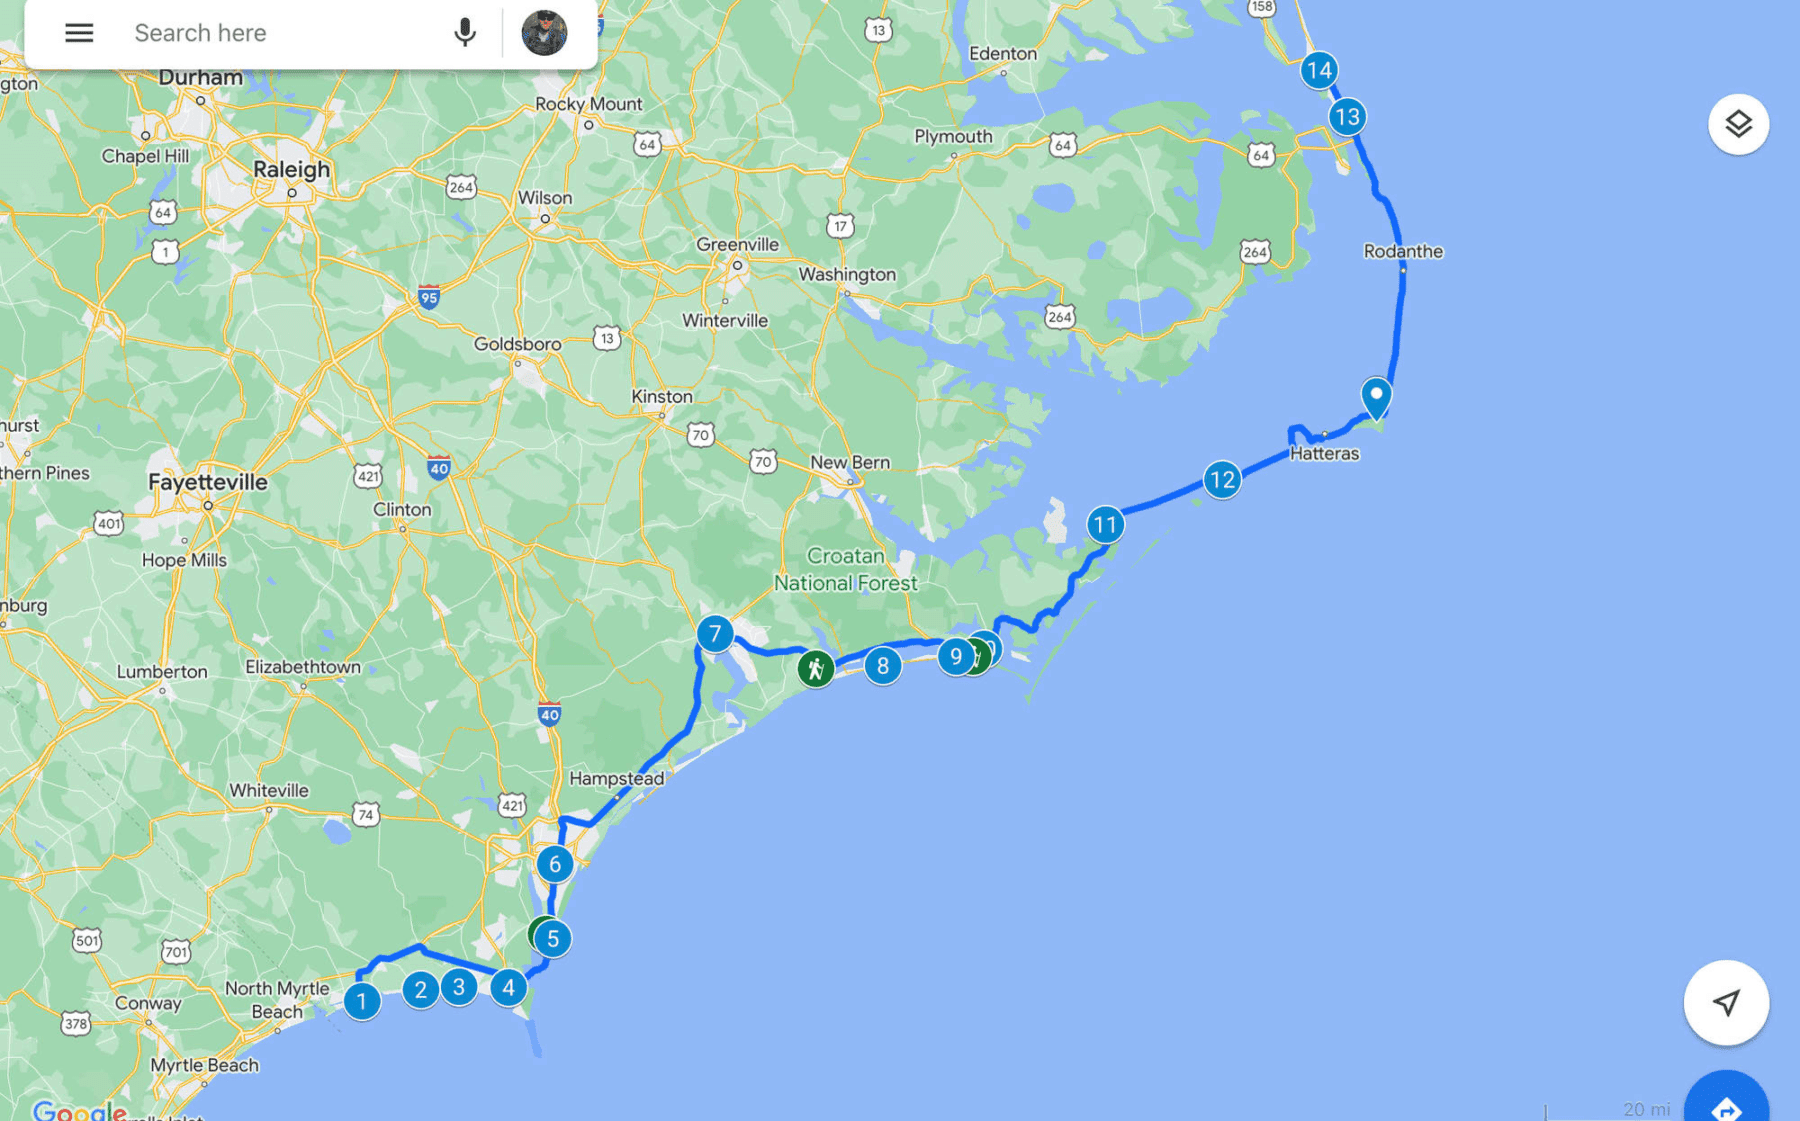 google map road trip